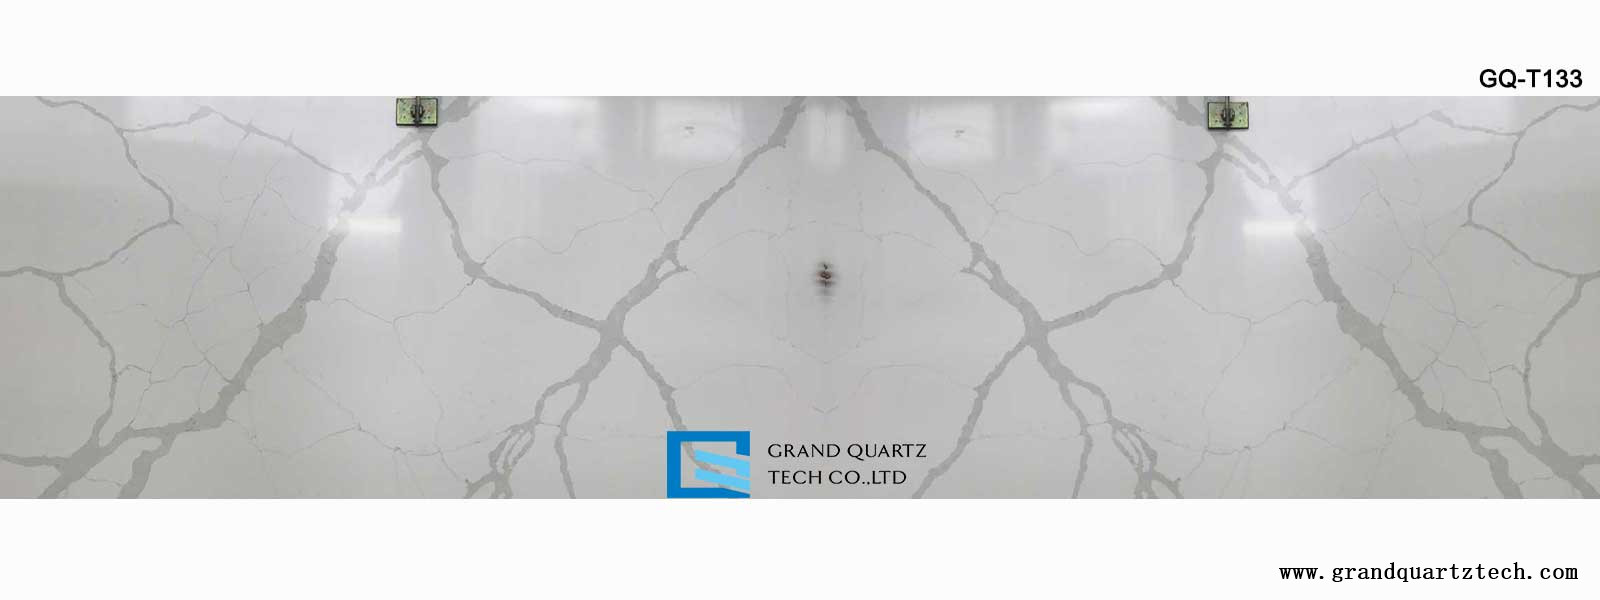 GQ-T133-symmetrical-quartz.jpg 